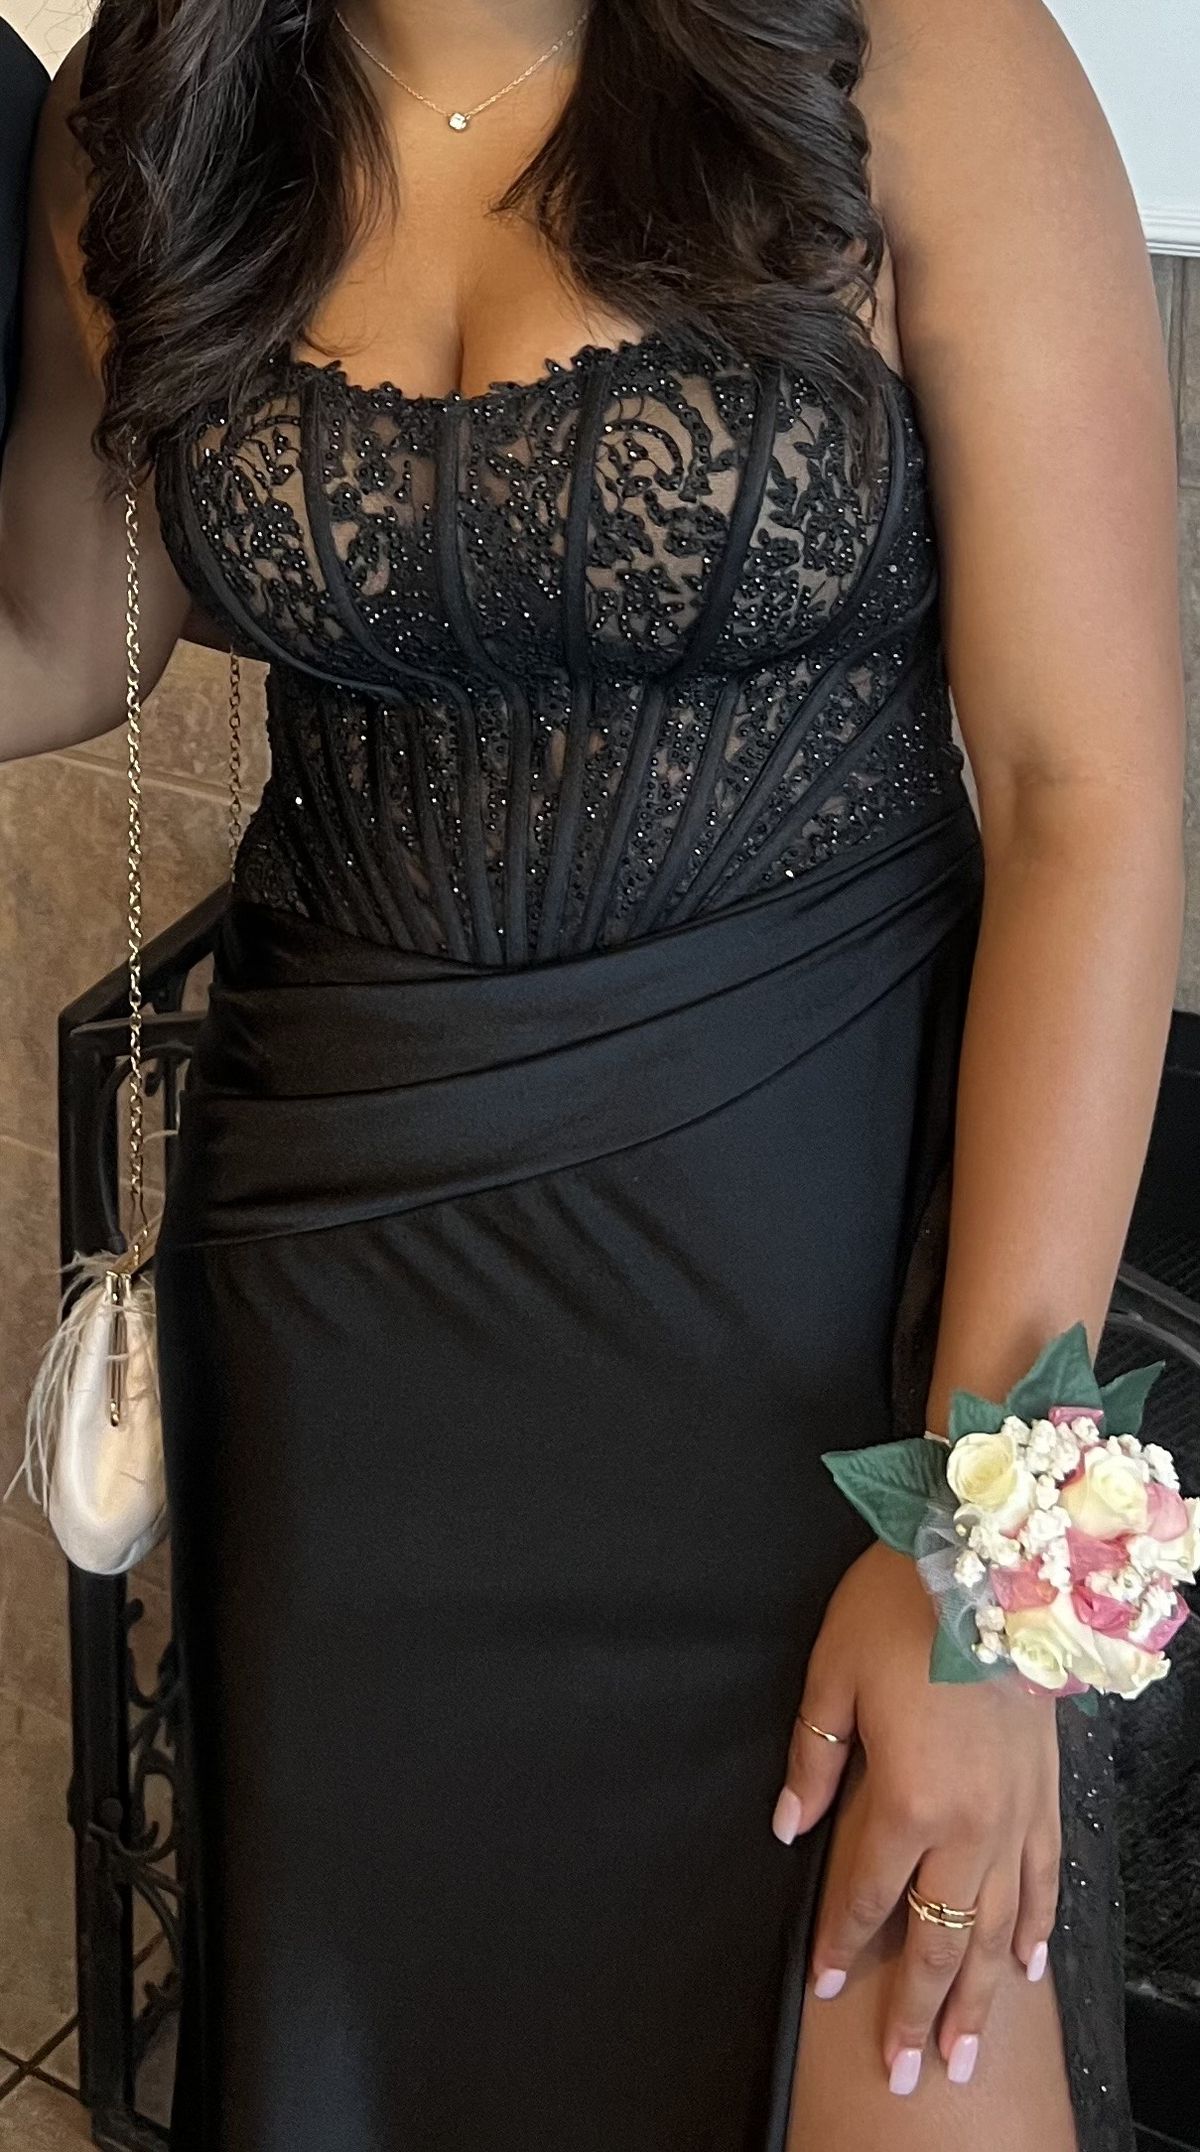 Ellie Wilde Size 8 Prom Strapless Black Mermaid Dress on Queenly